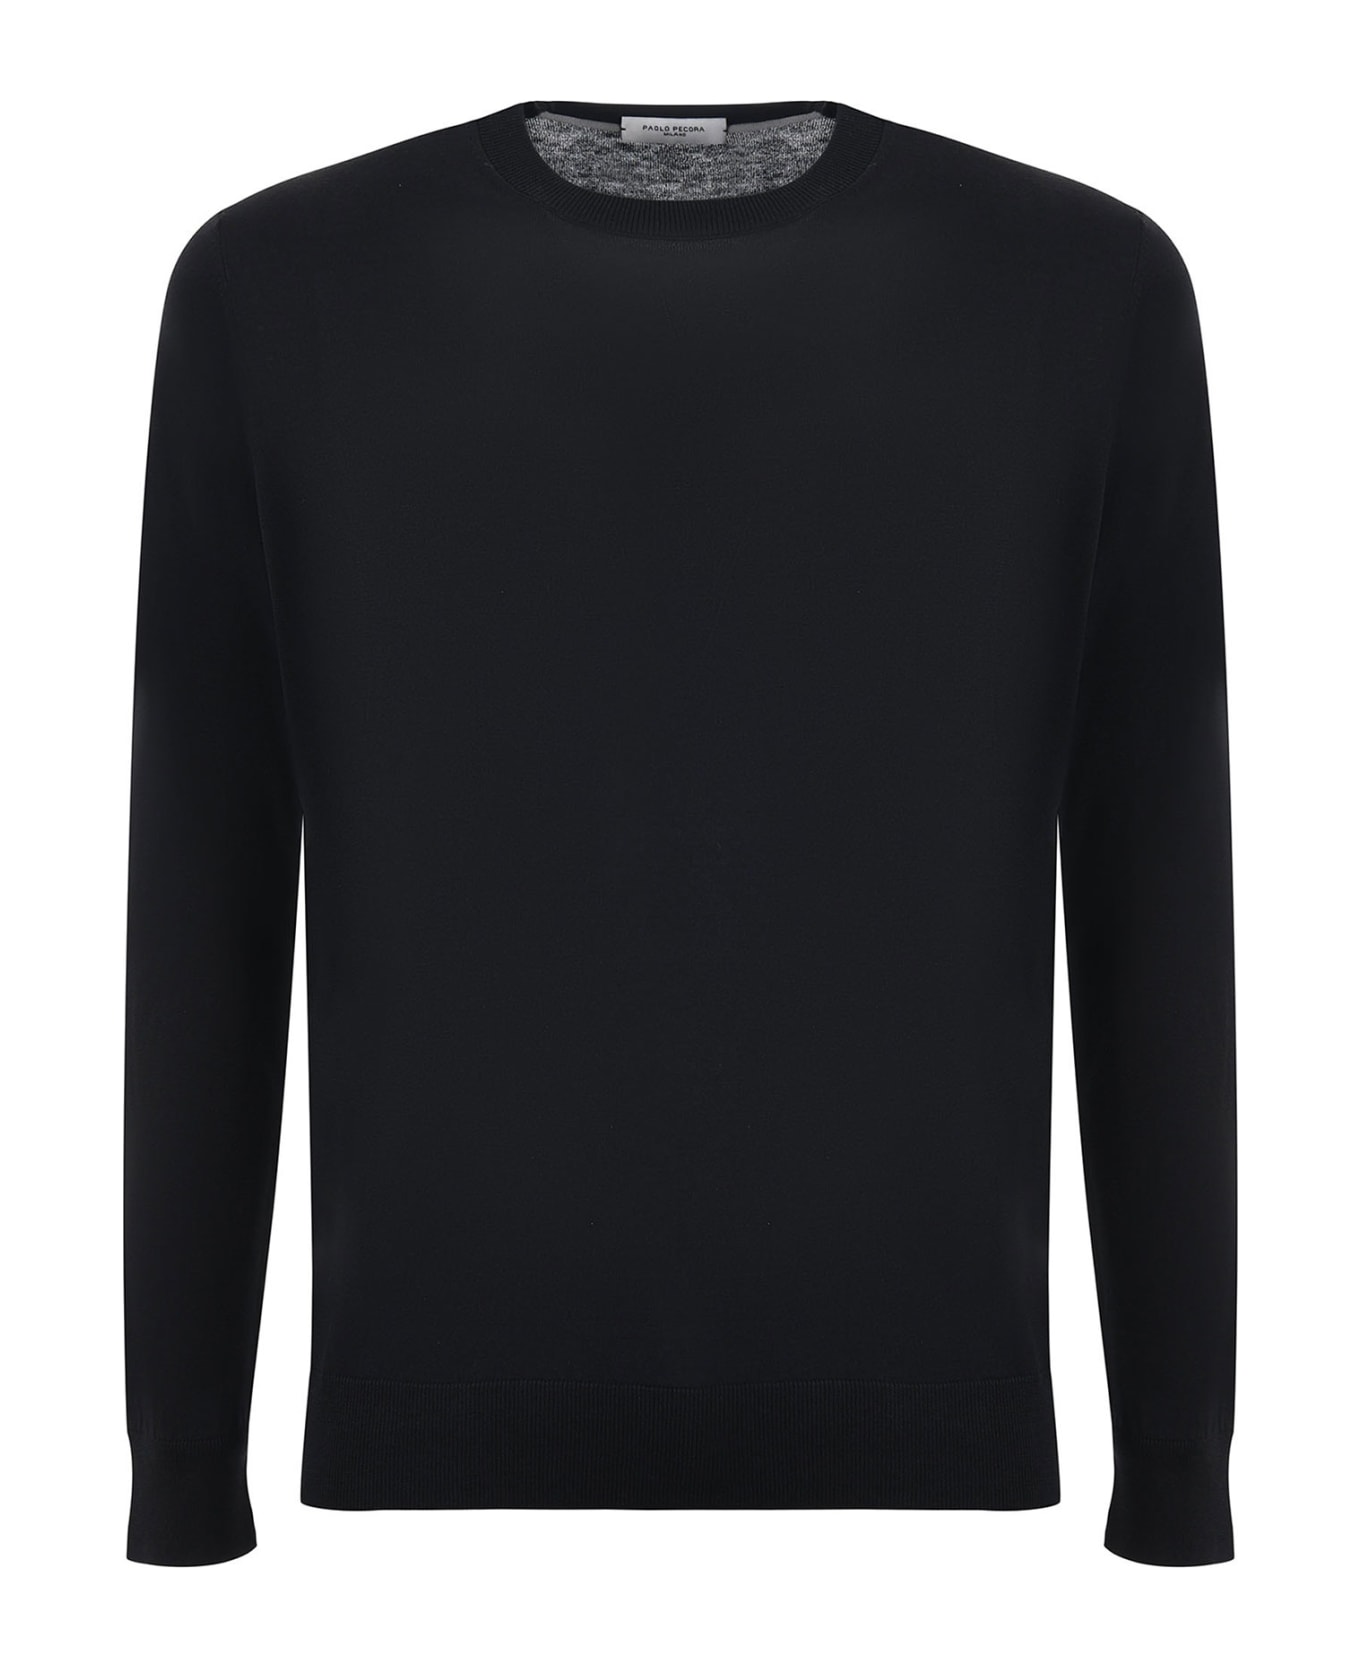 Paolo Pecora Black Crew-neck Sweater In Cotton And Silk Blend - NERO ニットウェア